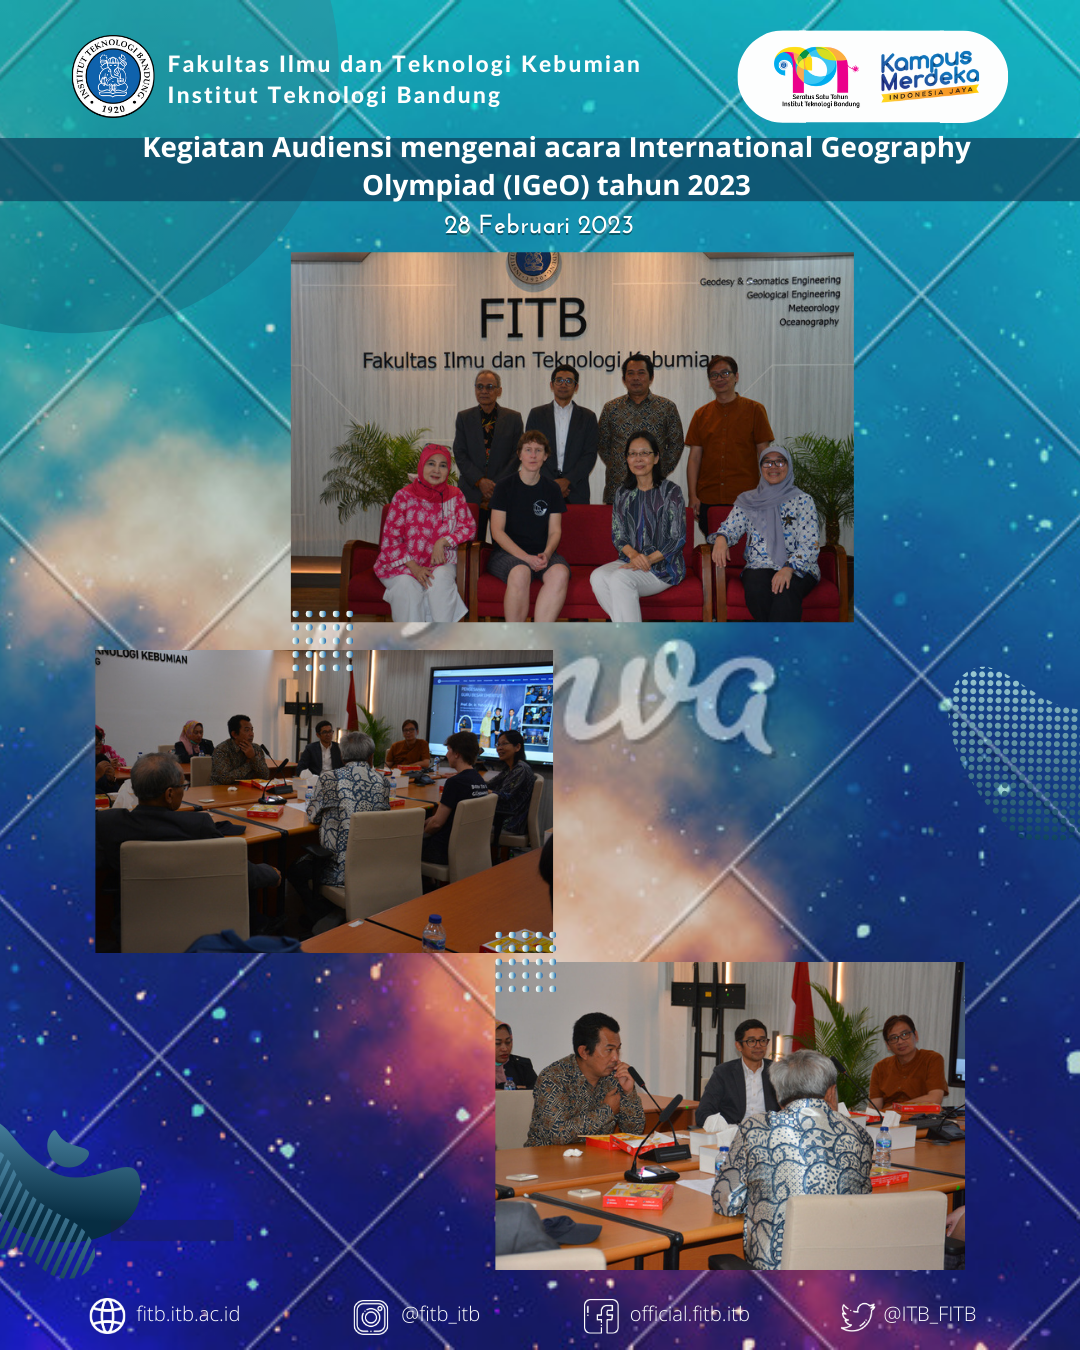 Kegiatan Audiensi mengenai acara International Geography Olympiad (IGeO) tahun 2023